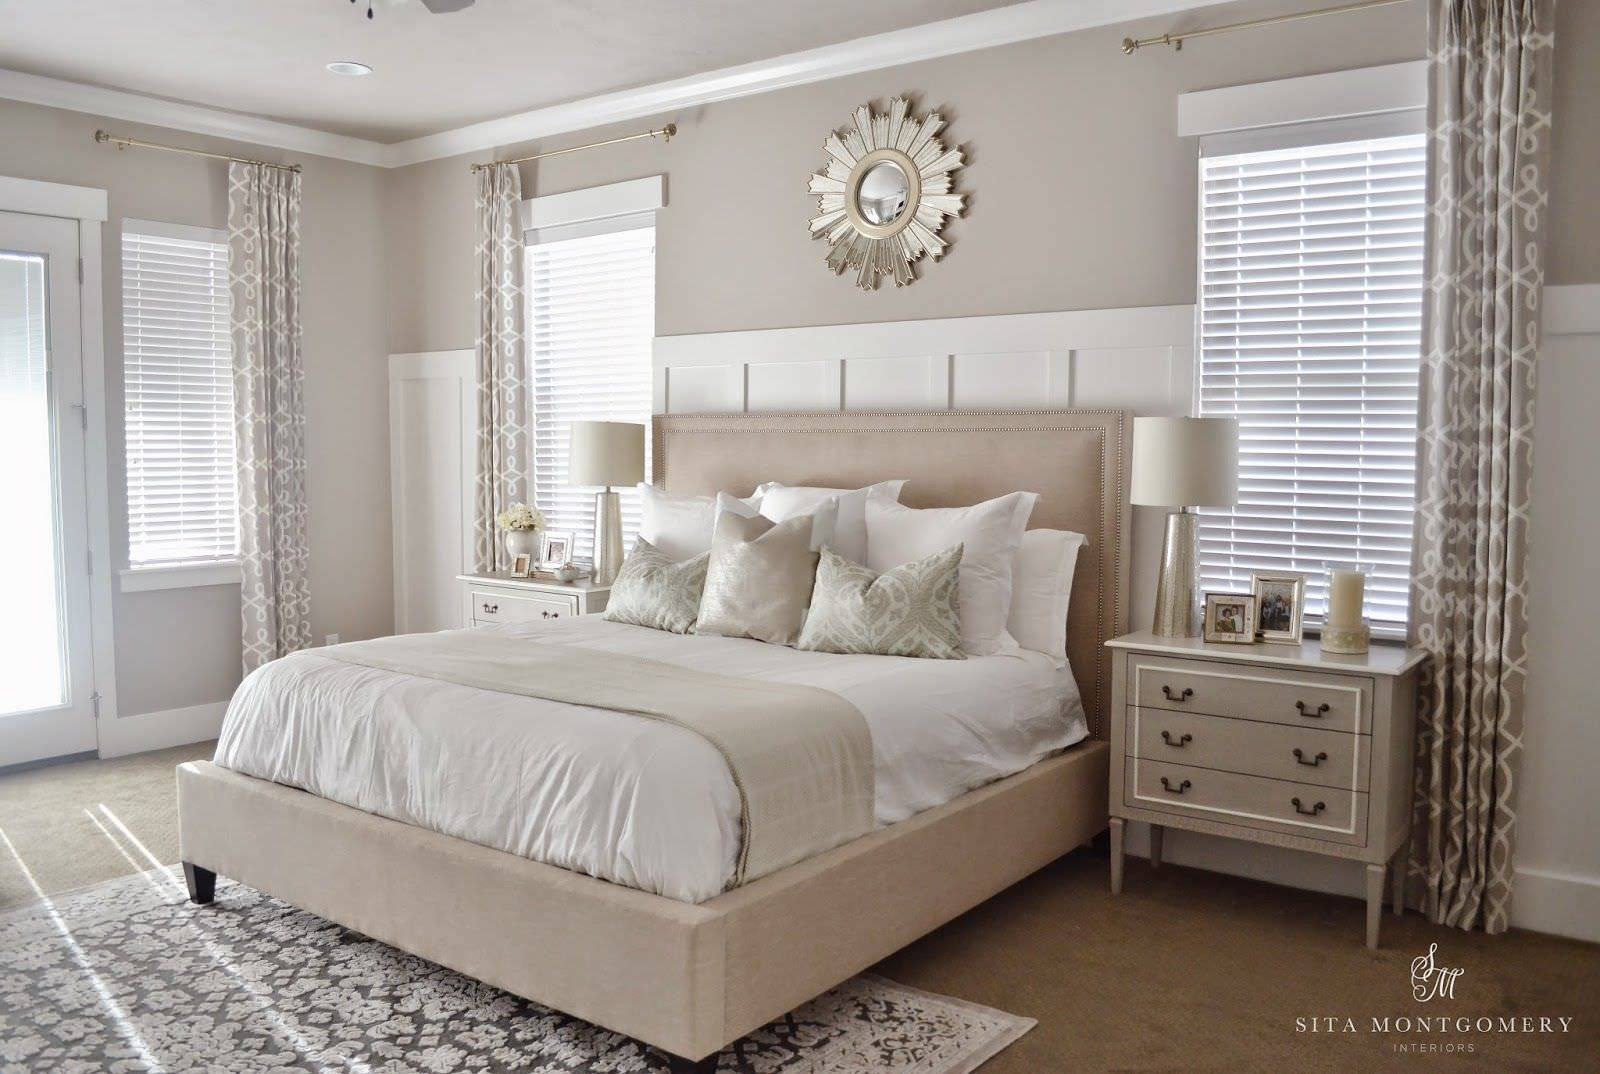 Neutral Paint Colors For Bedrooms
 Blue Master Bedroom Ideas Romantic Neutral Colors Cool